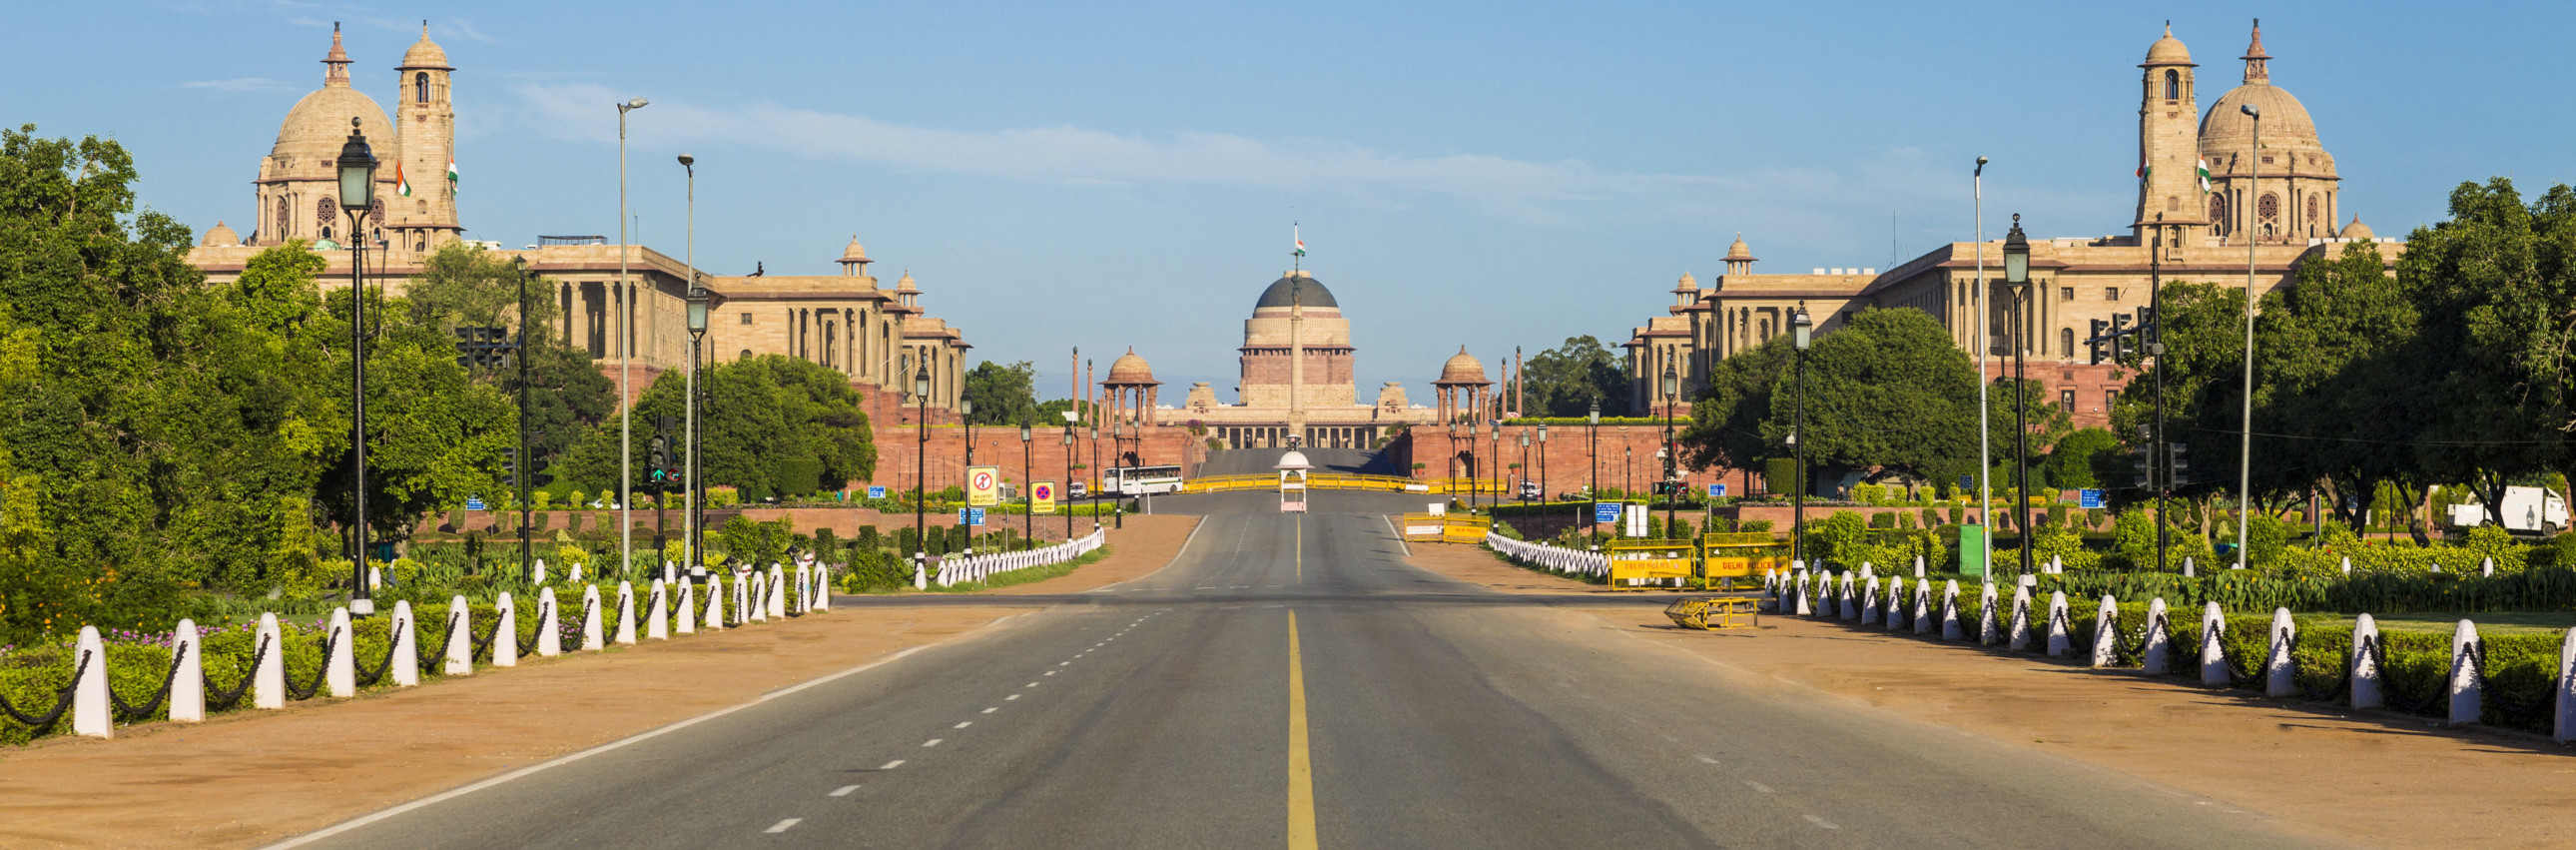 Best Places To Visit In New Delhi, Delhi Tourist Places | The LaLiT New